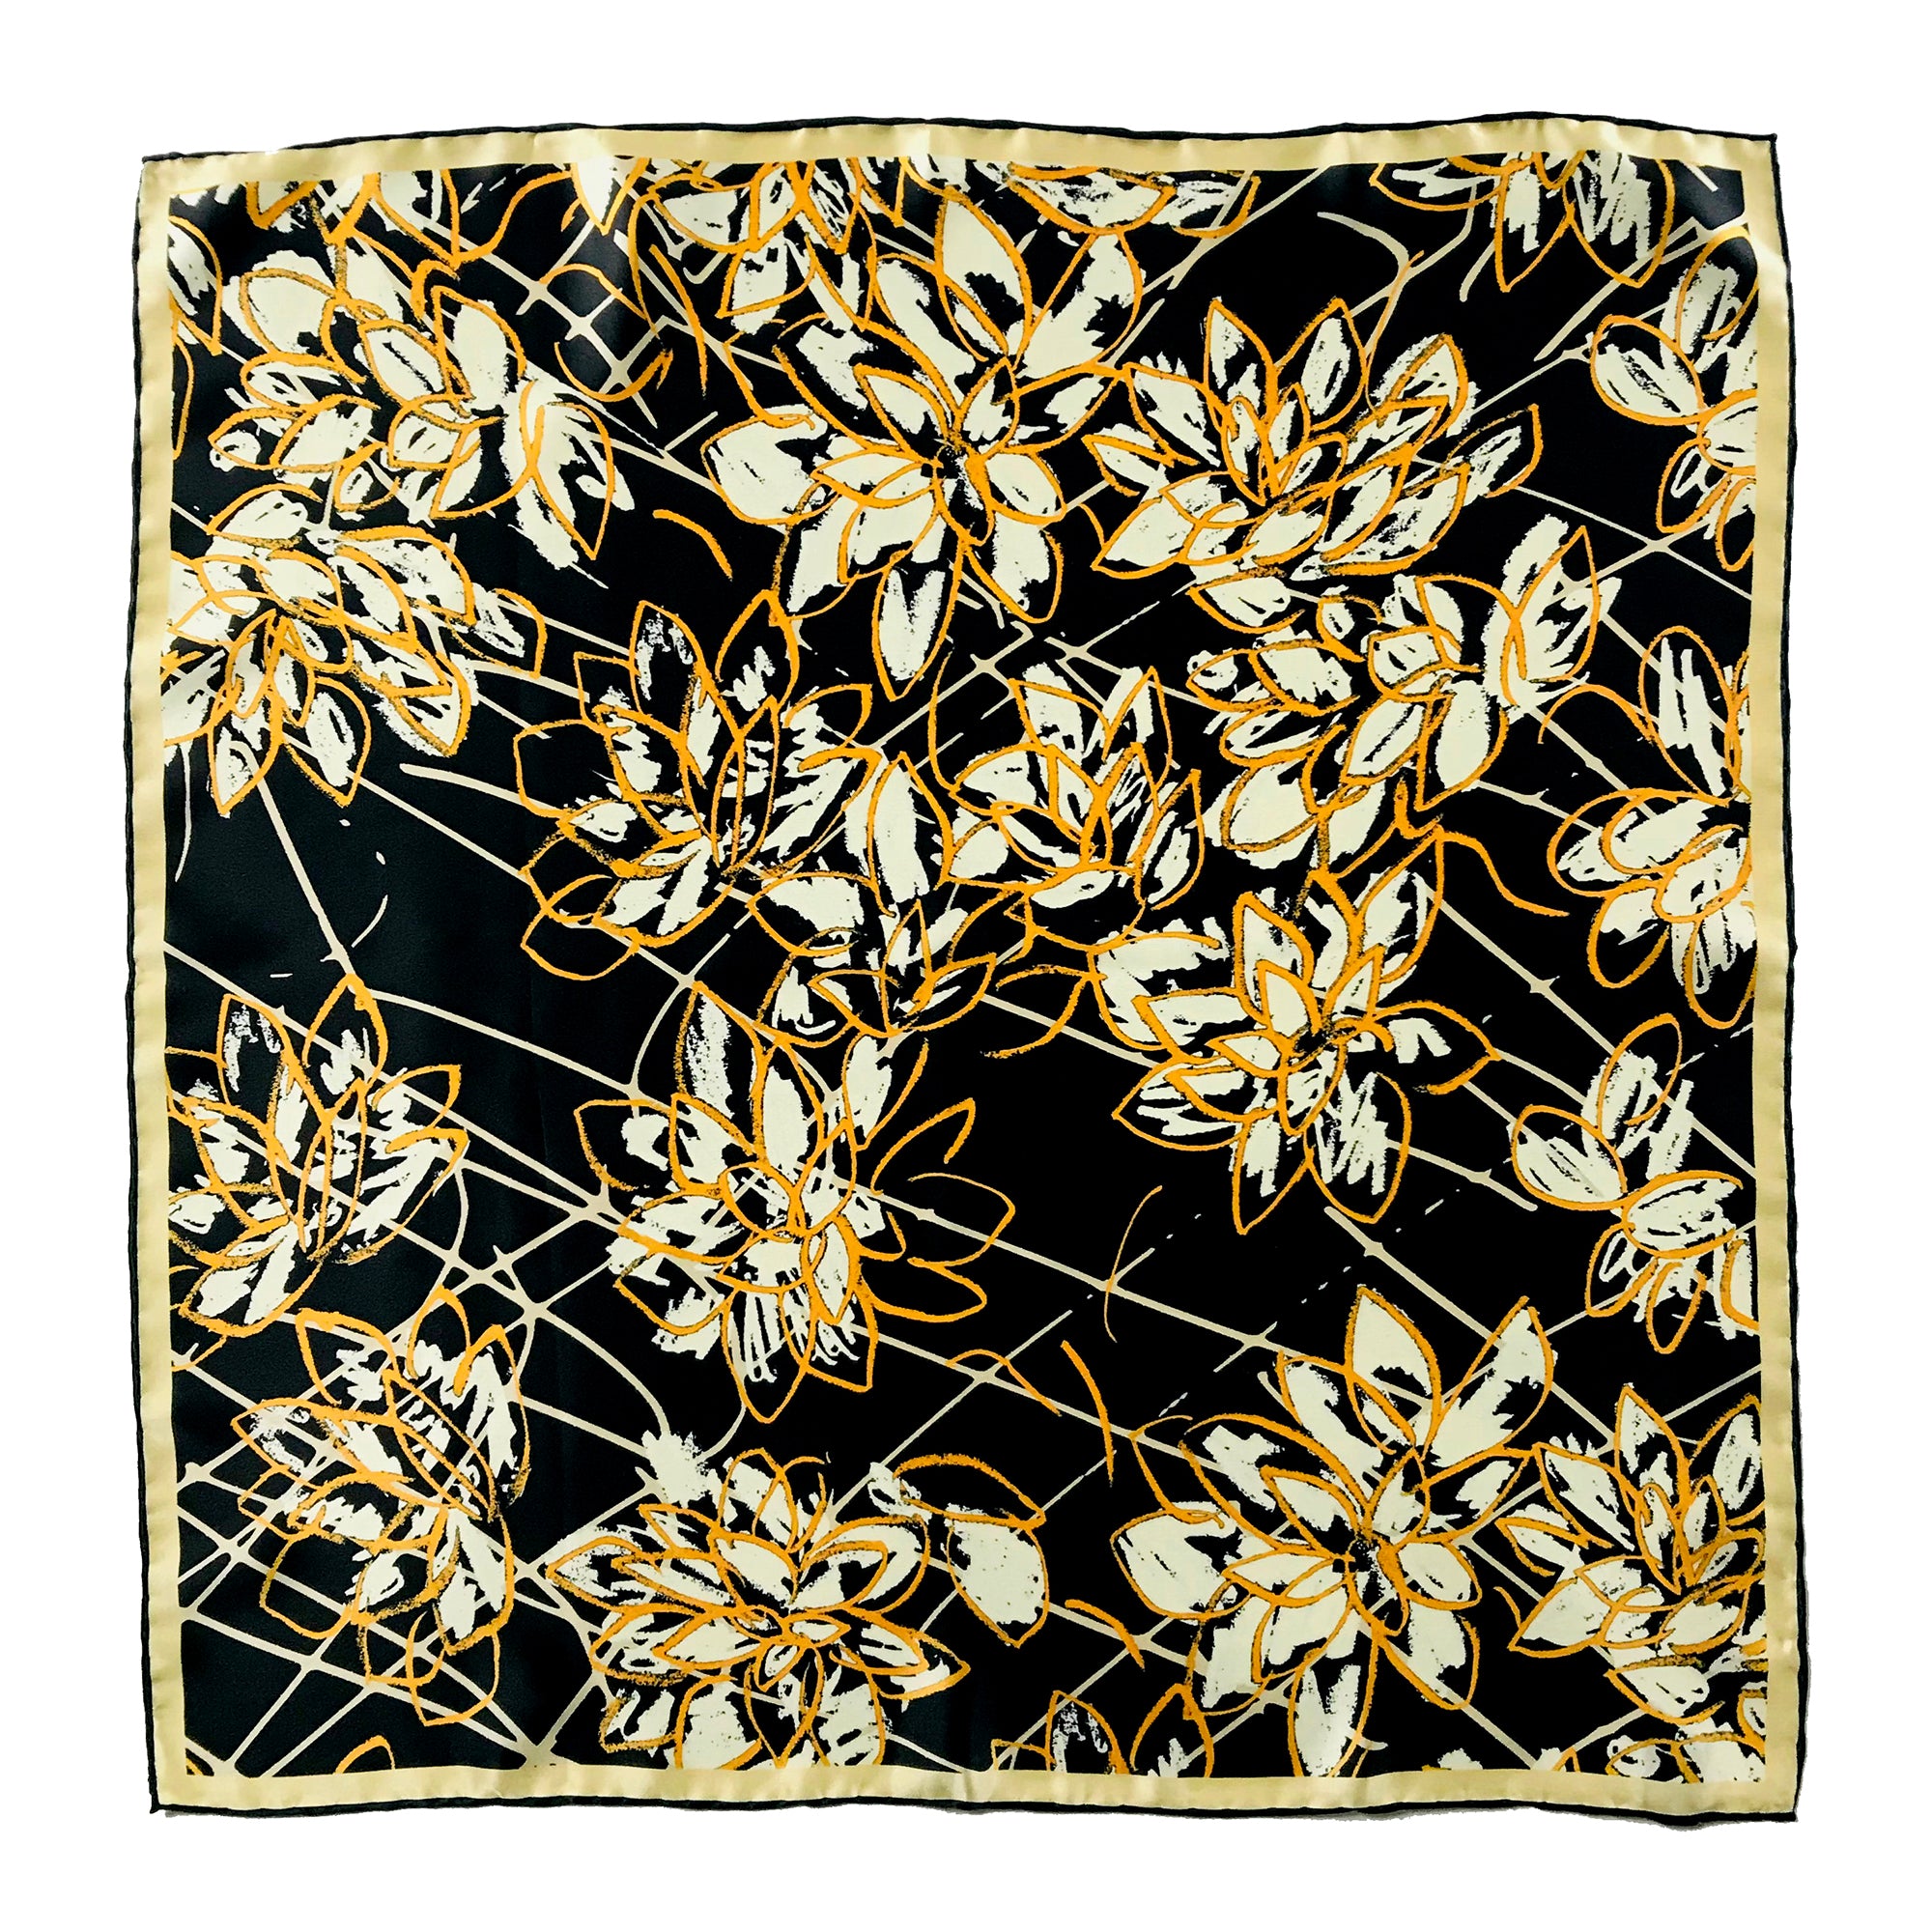 Golden rhododendron scarf